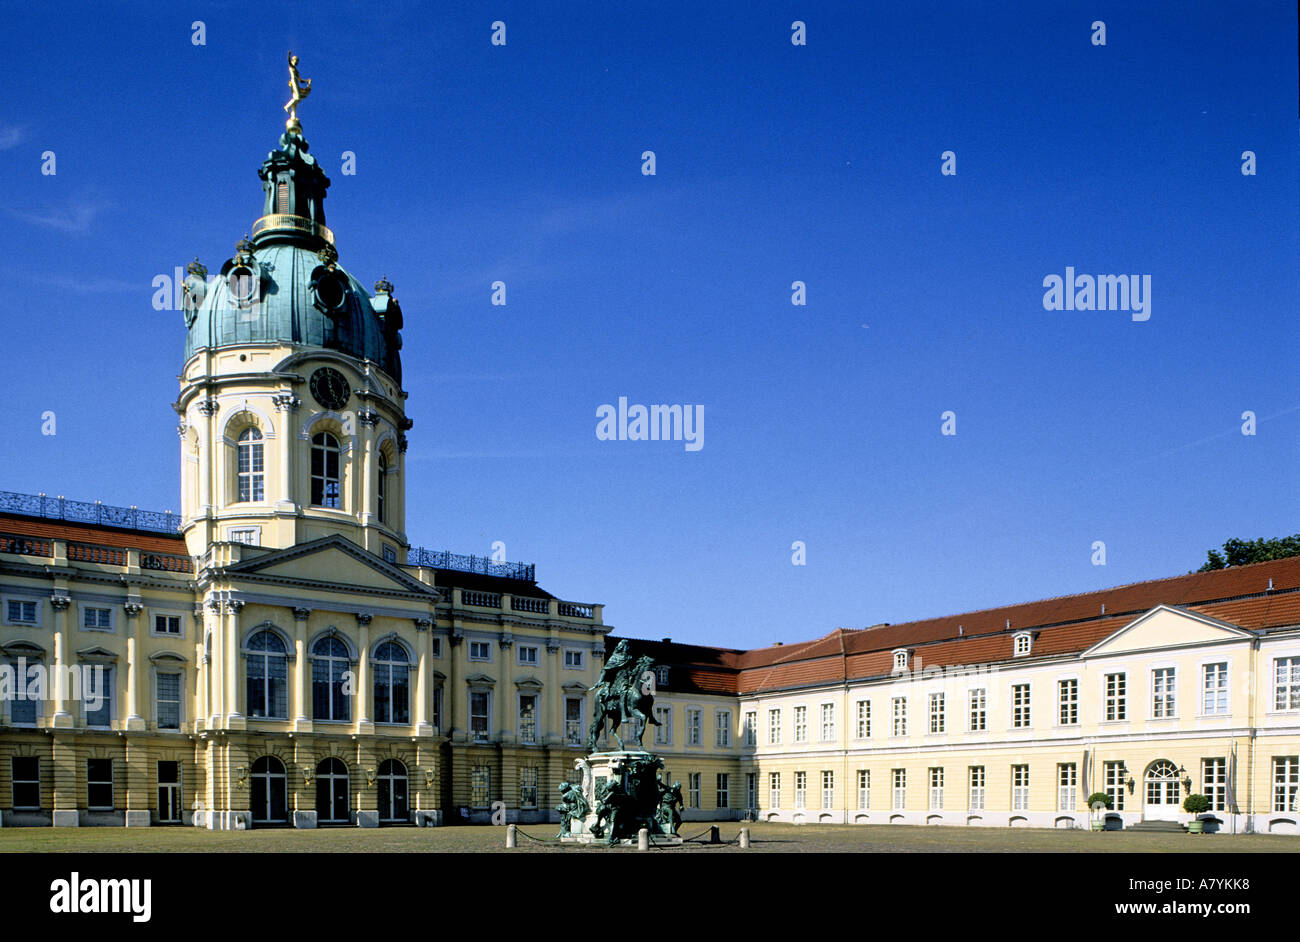 Germany, Berlin, Charlottenburg castle rebuilt after World War II Stock Photo